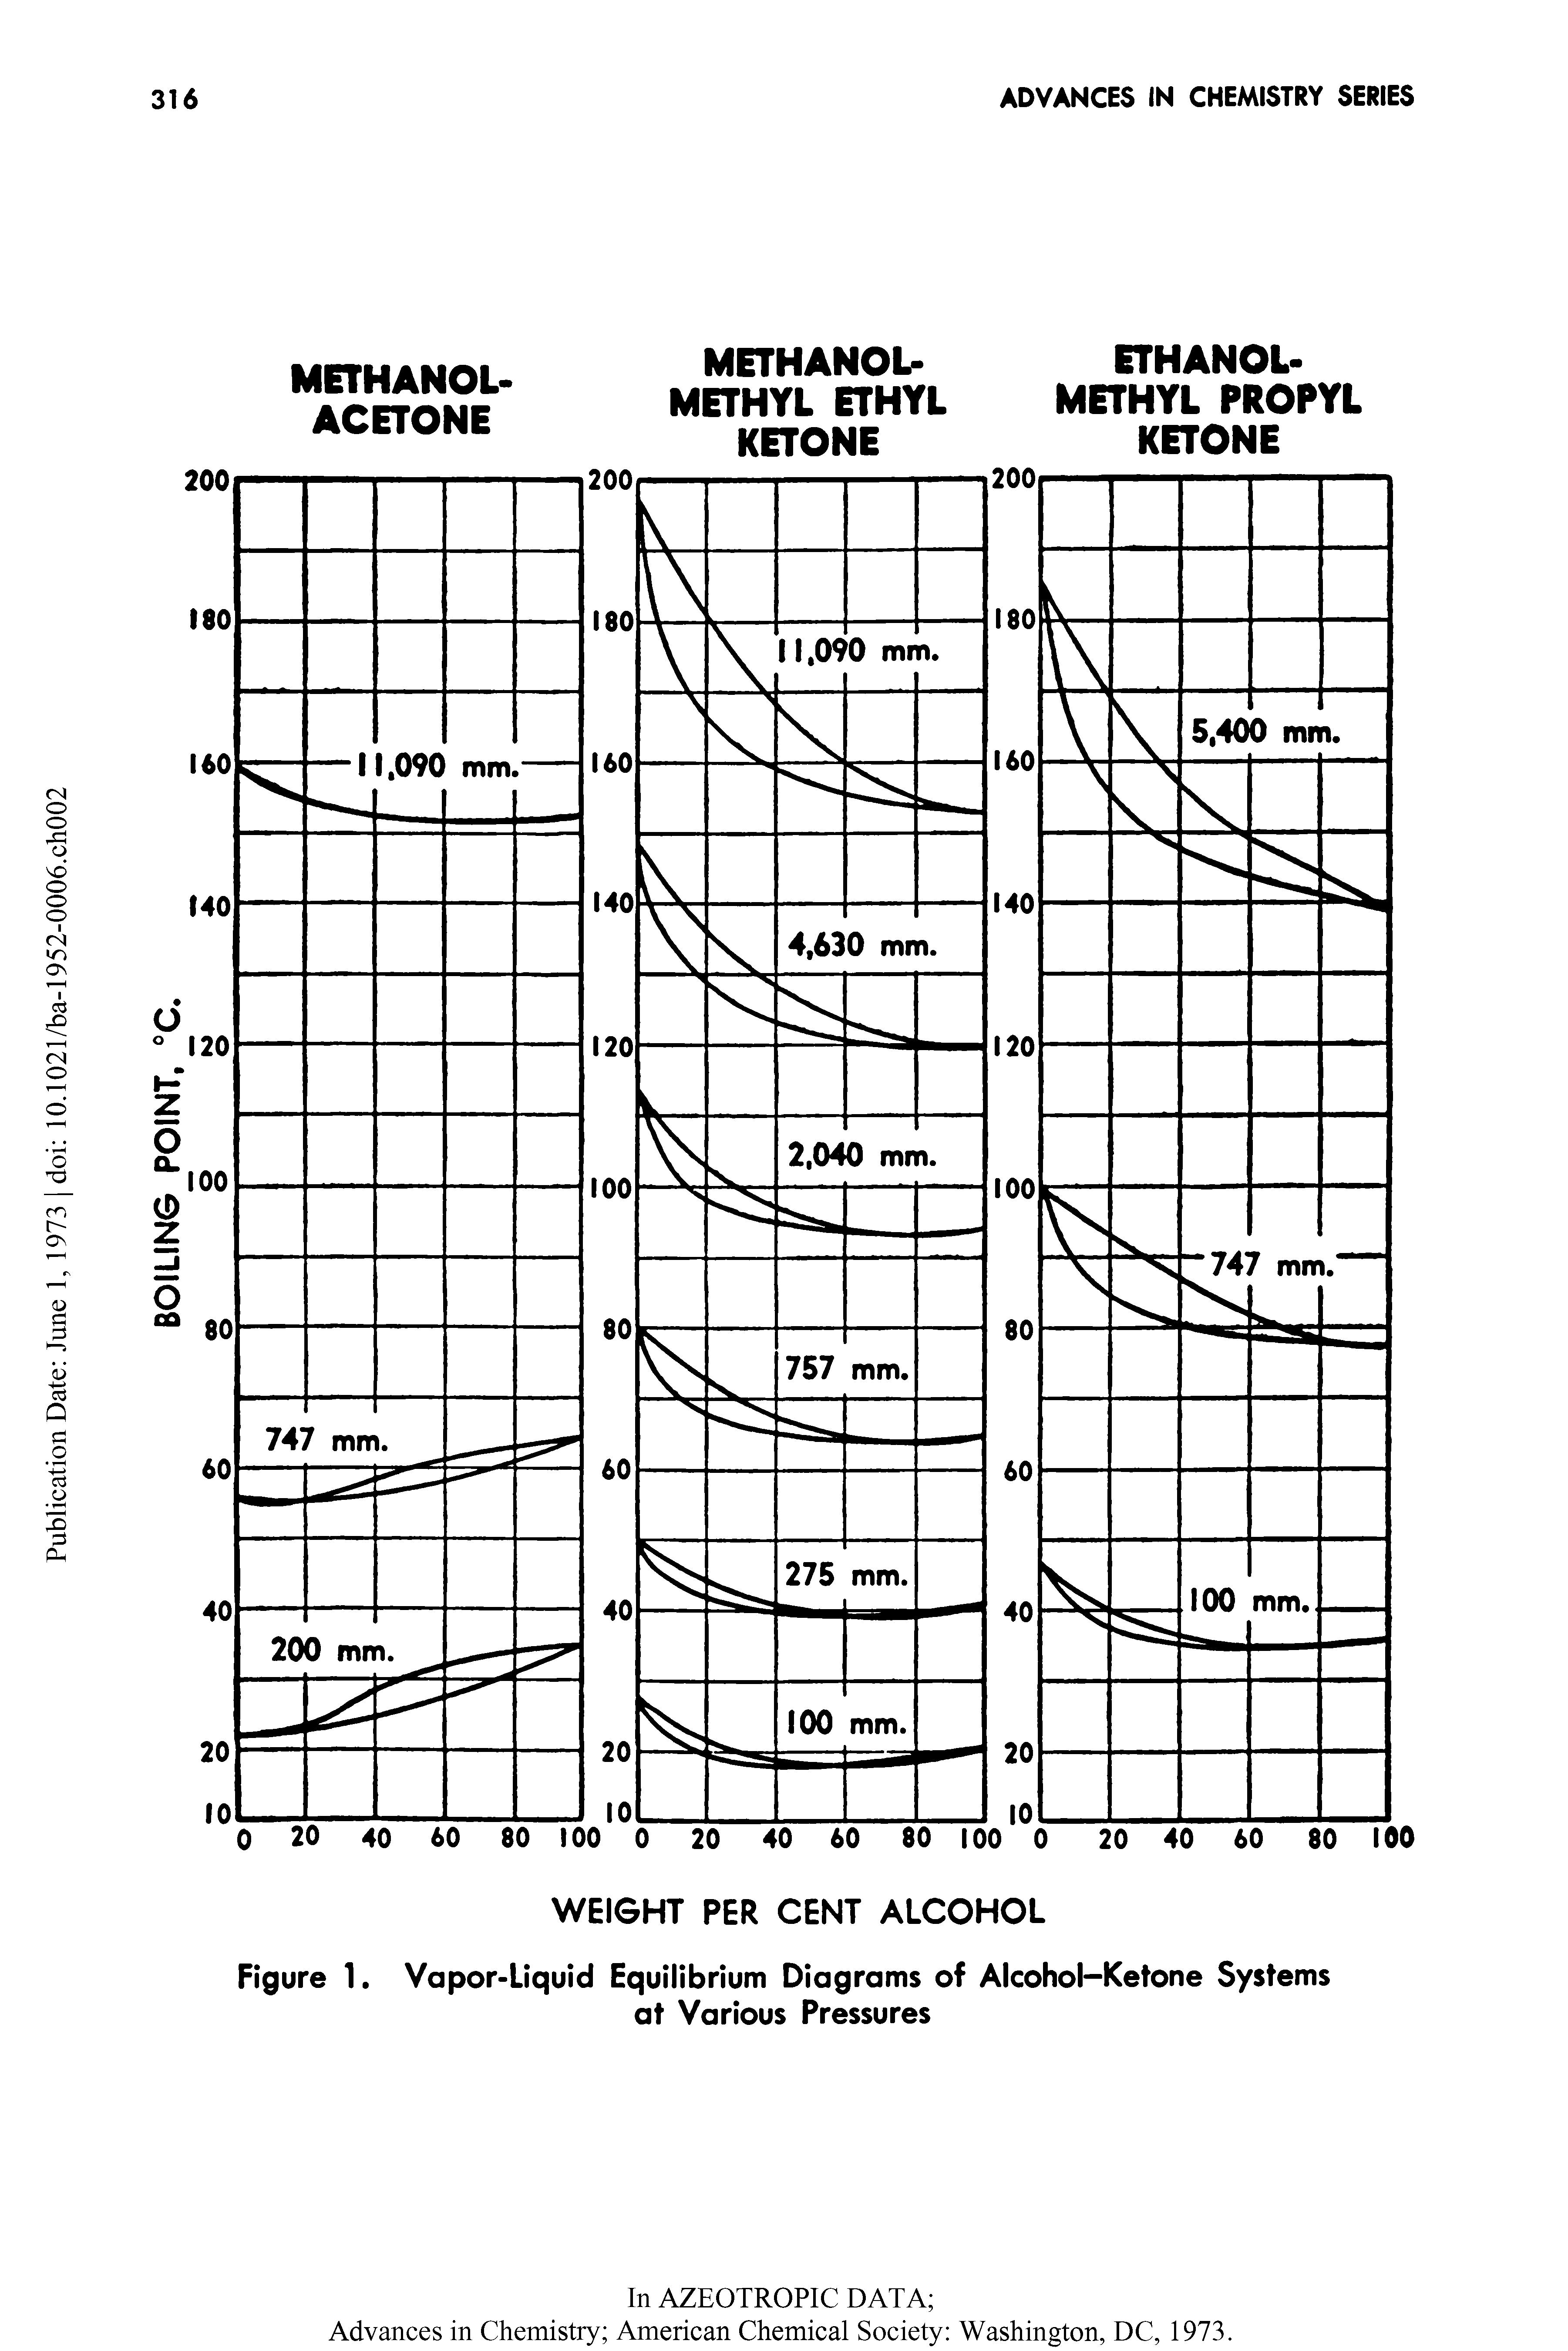 Figure 1. Vapor-Liquid Equilibrium Diagrams of Alcohol-Ketone Systems...